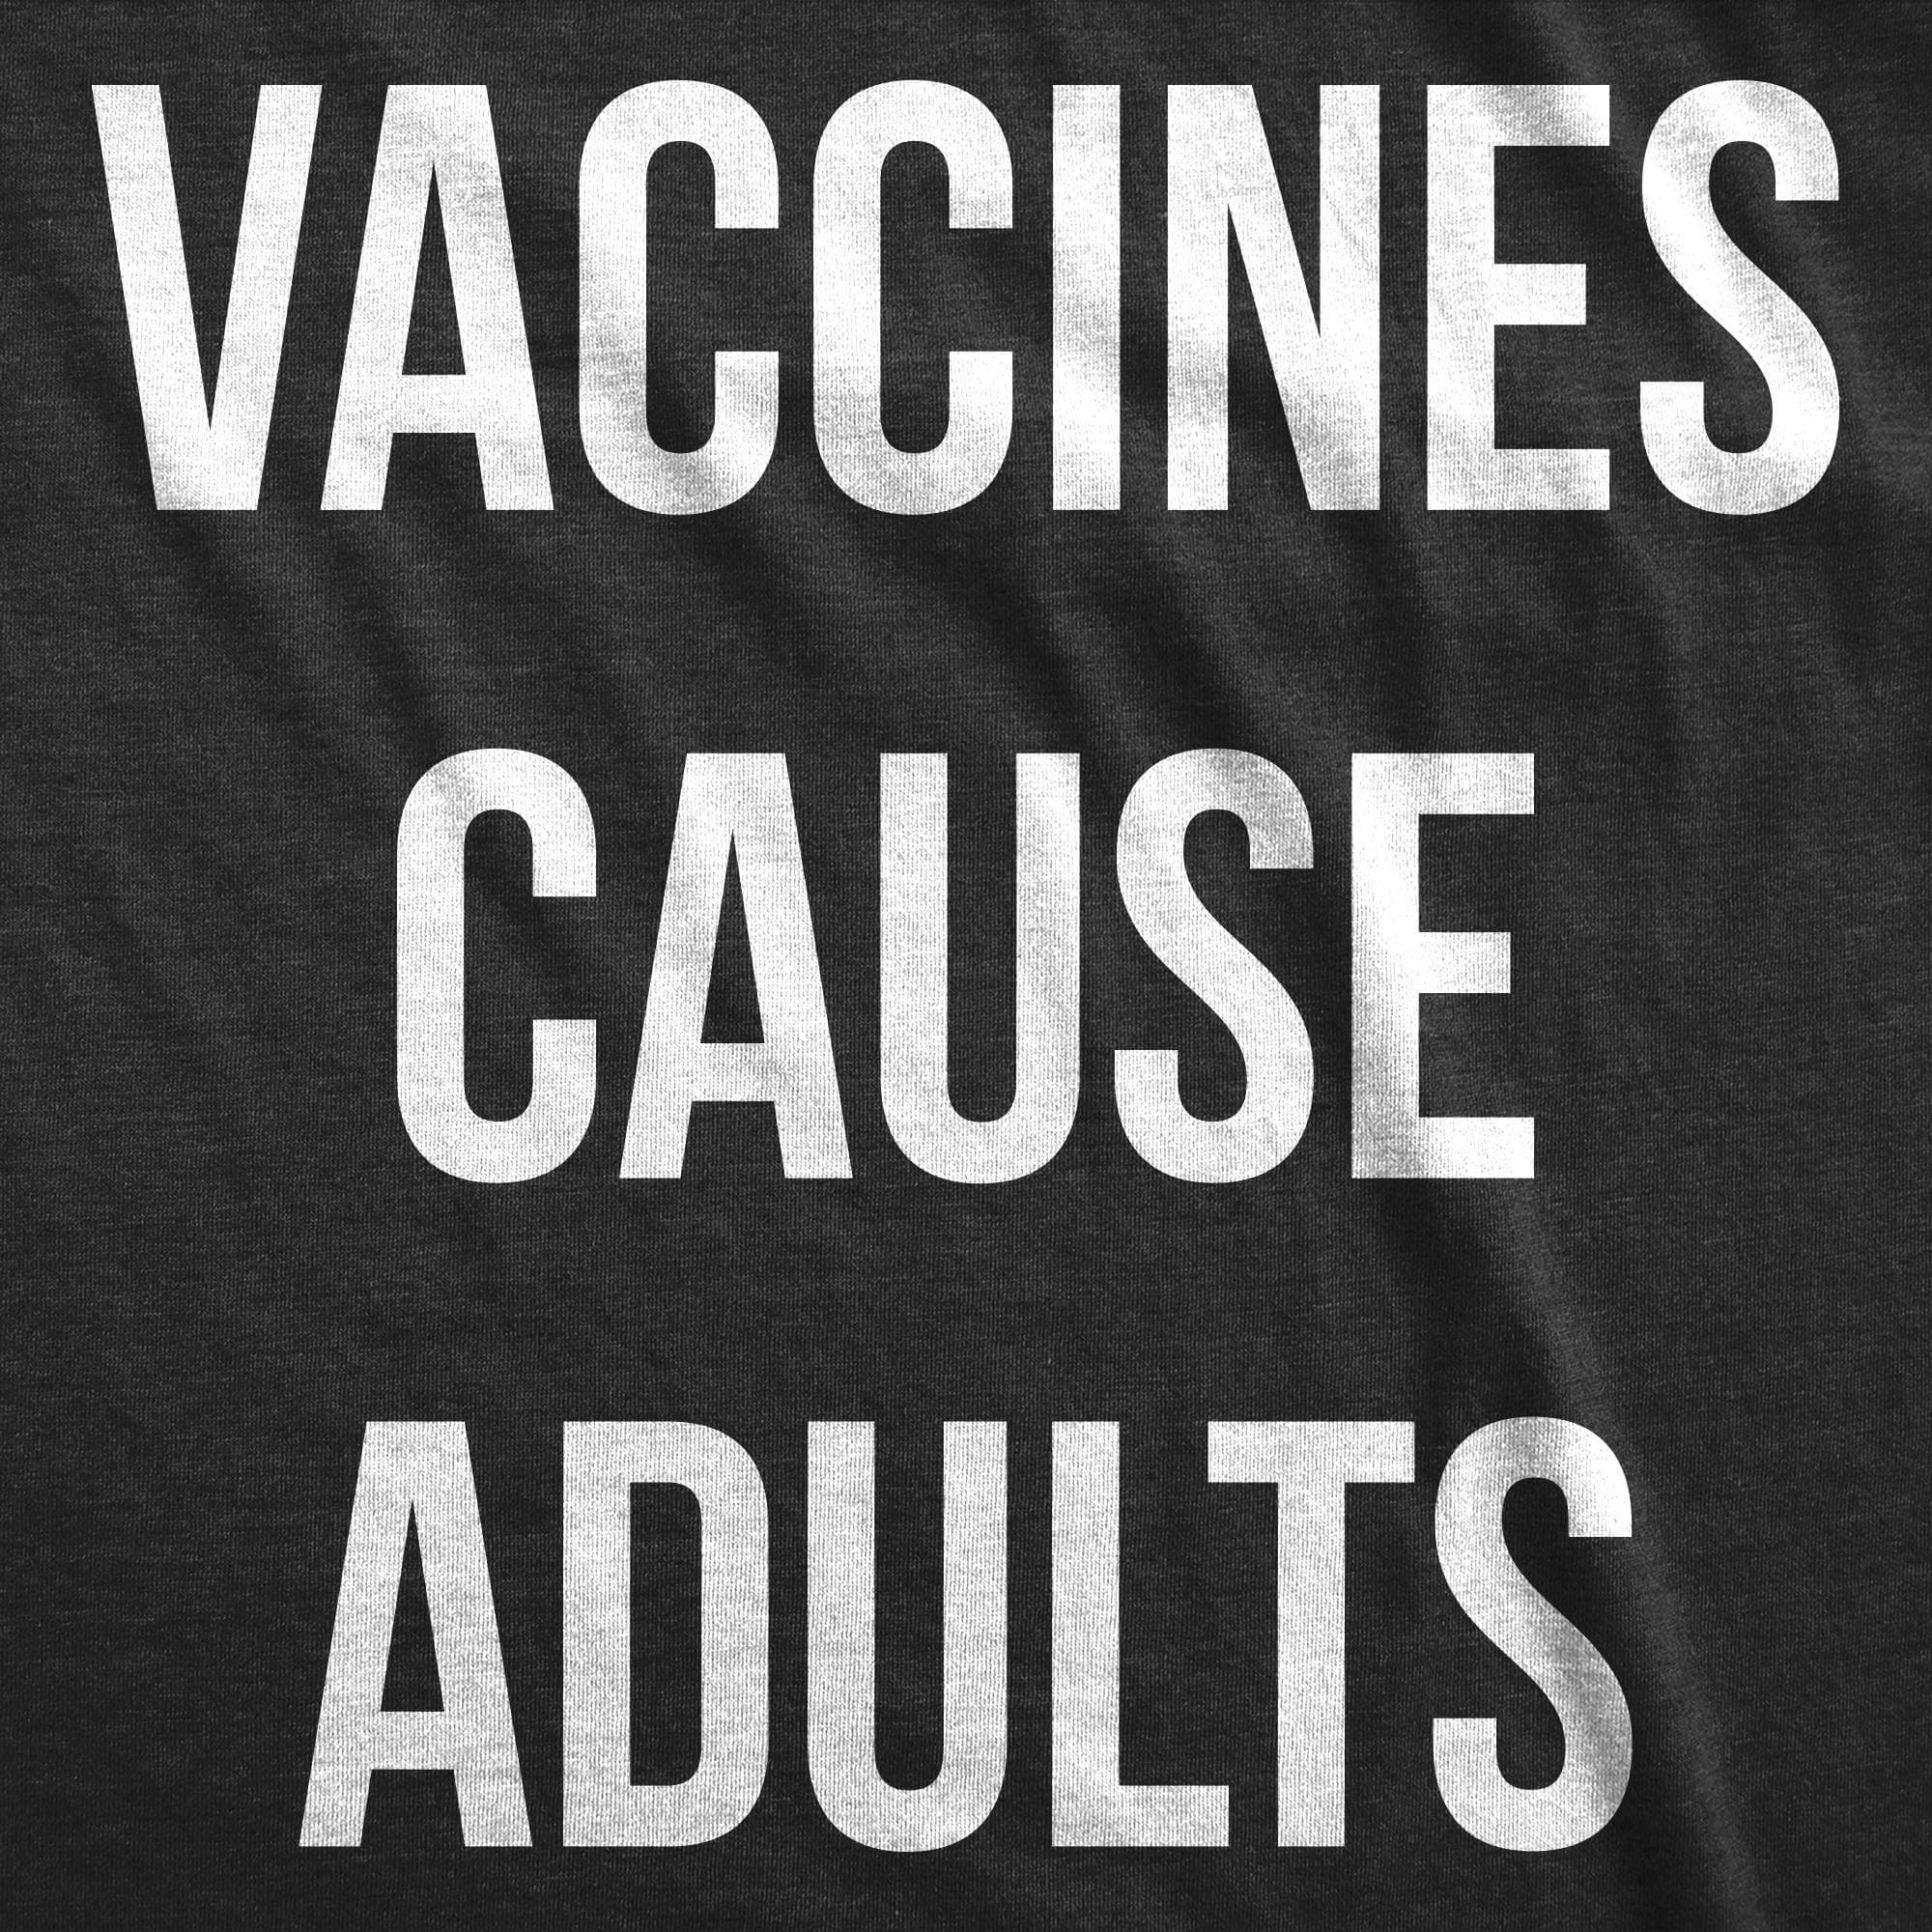 Vaccines Cause Adults Men's Tshirt  -  Crazy Dog T-Shirts